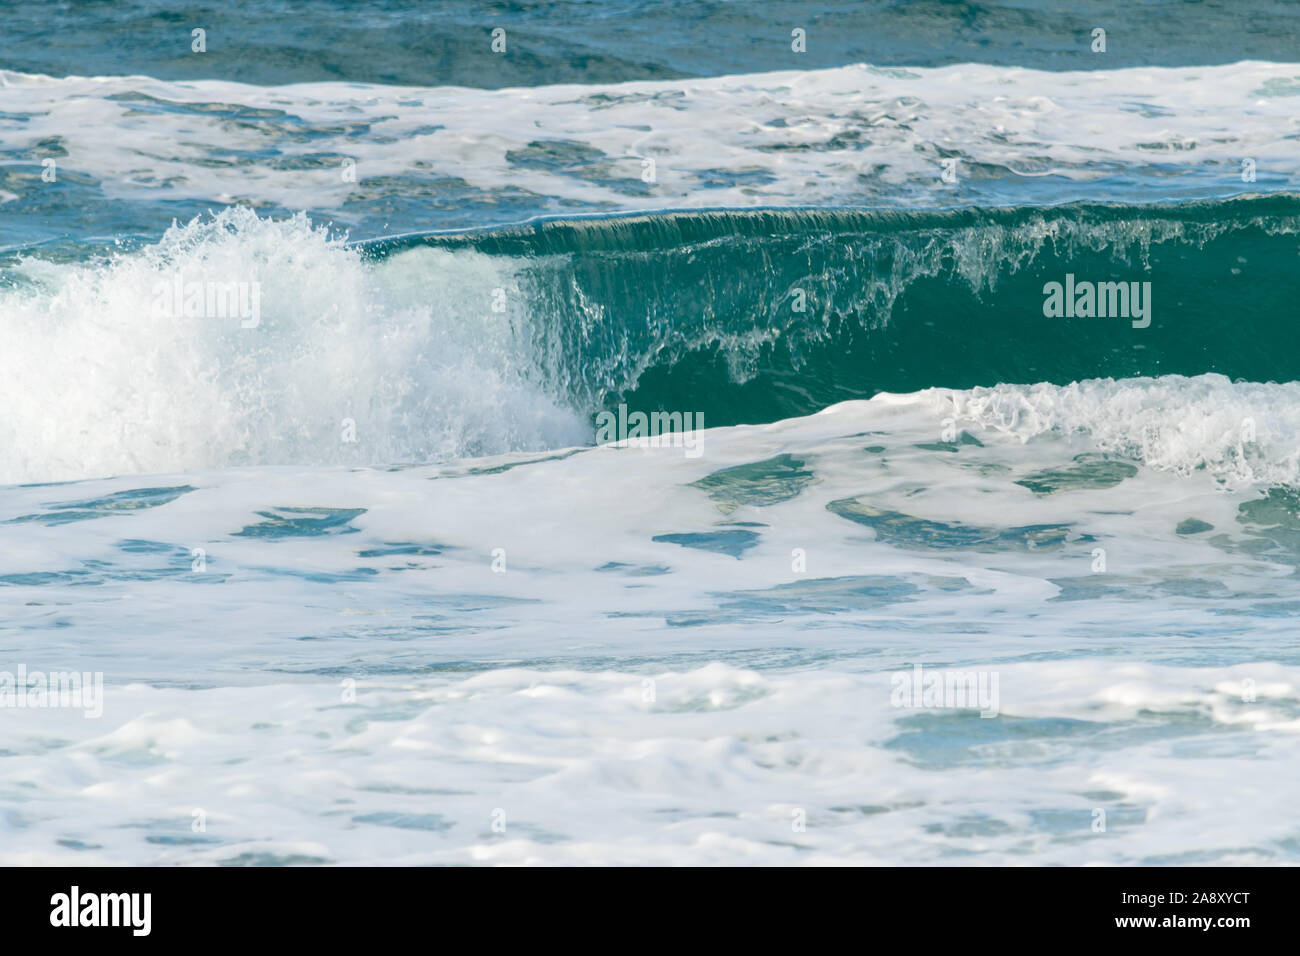 Breaking Ocean wave stock photo Stock Photo